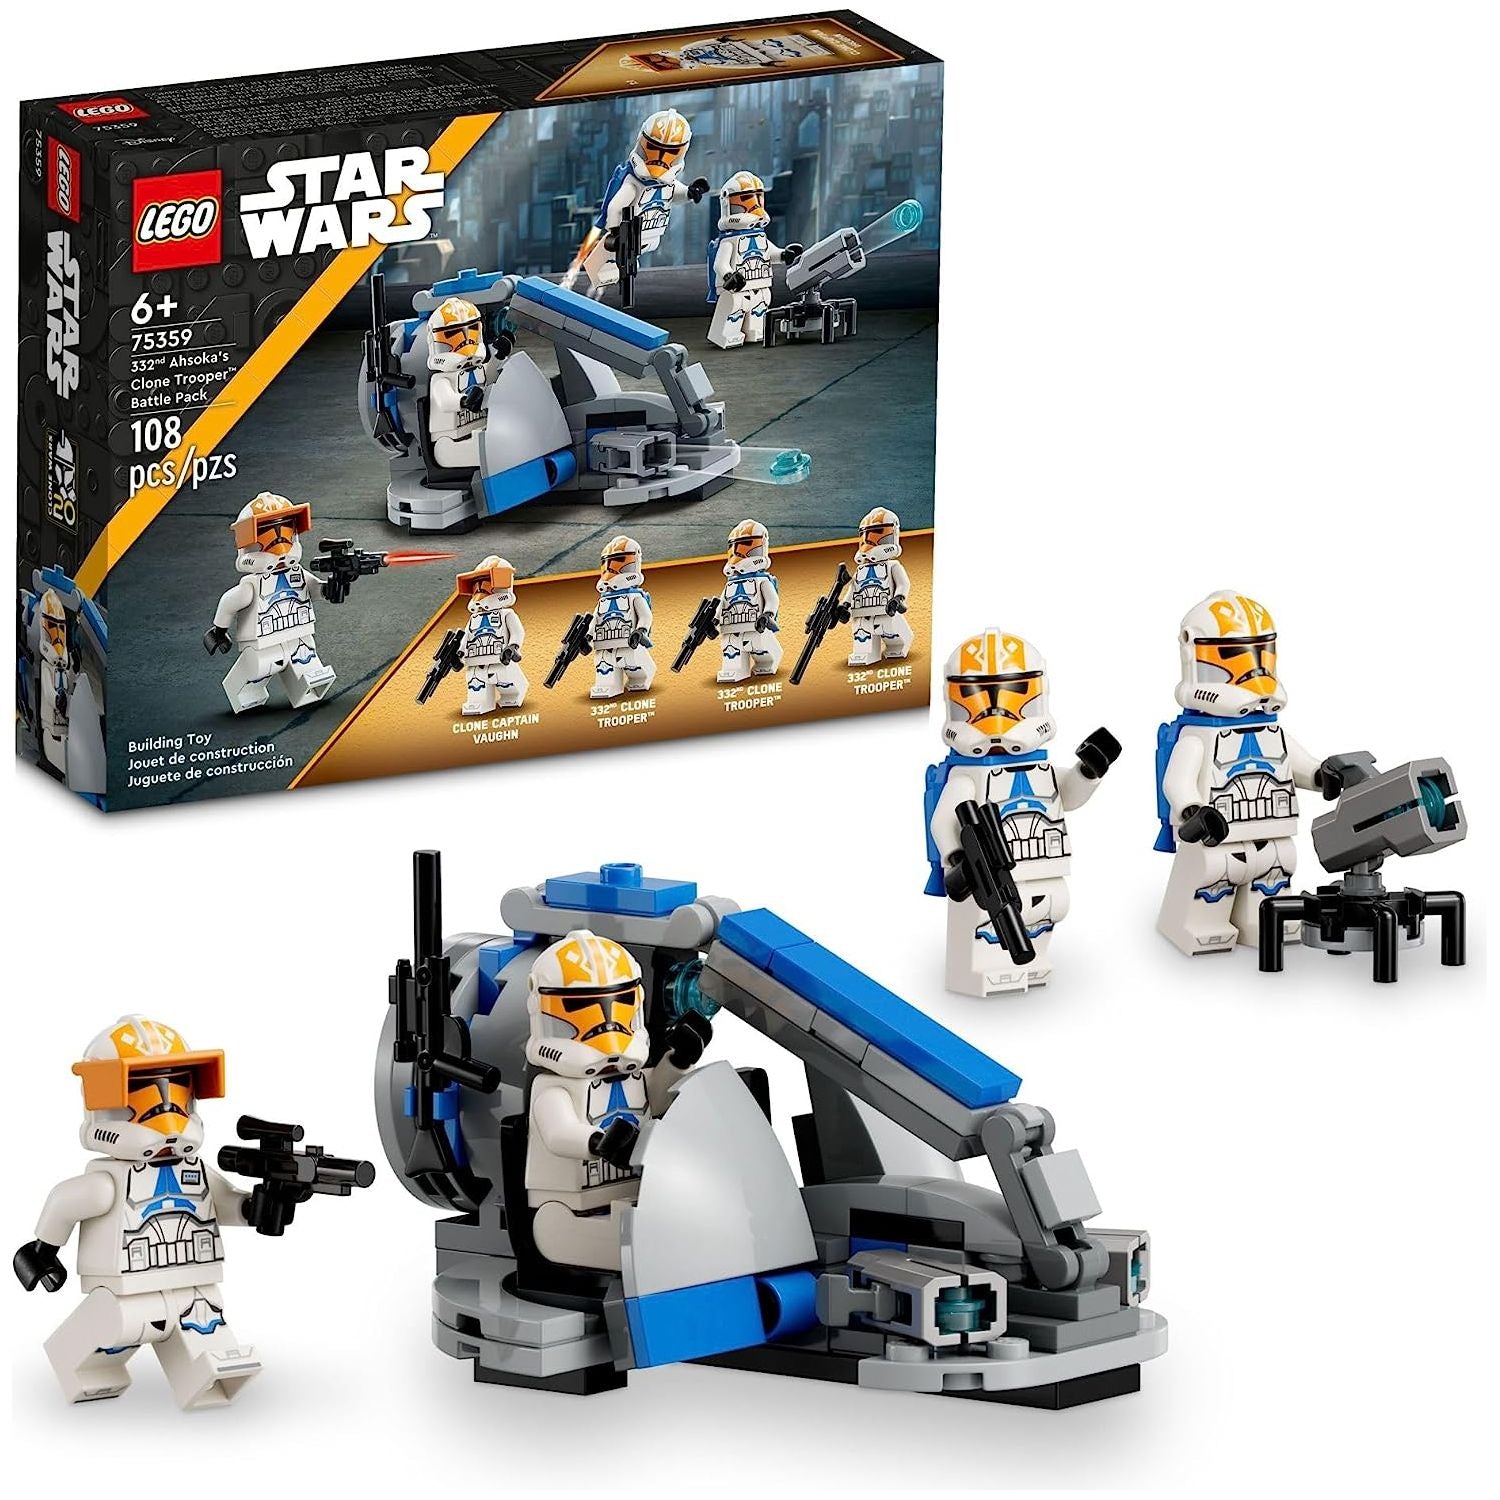 LEGO Star Wars 332nd Ahsoka’s Clone Trooper Battle Pack 75359 Building Toy Set